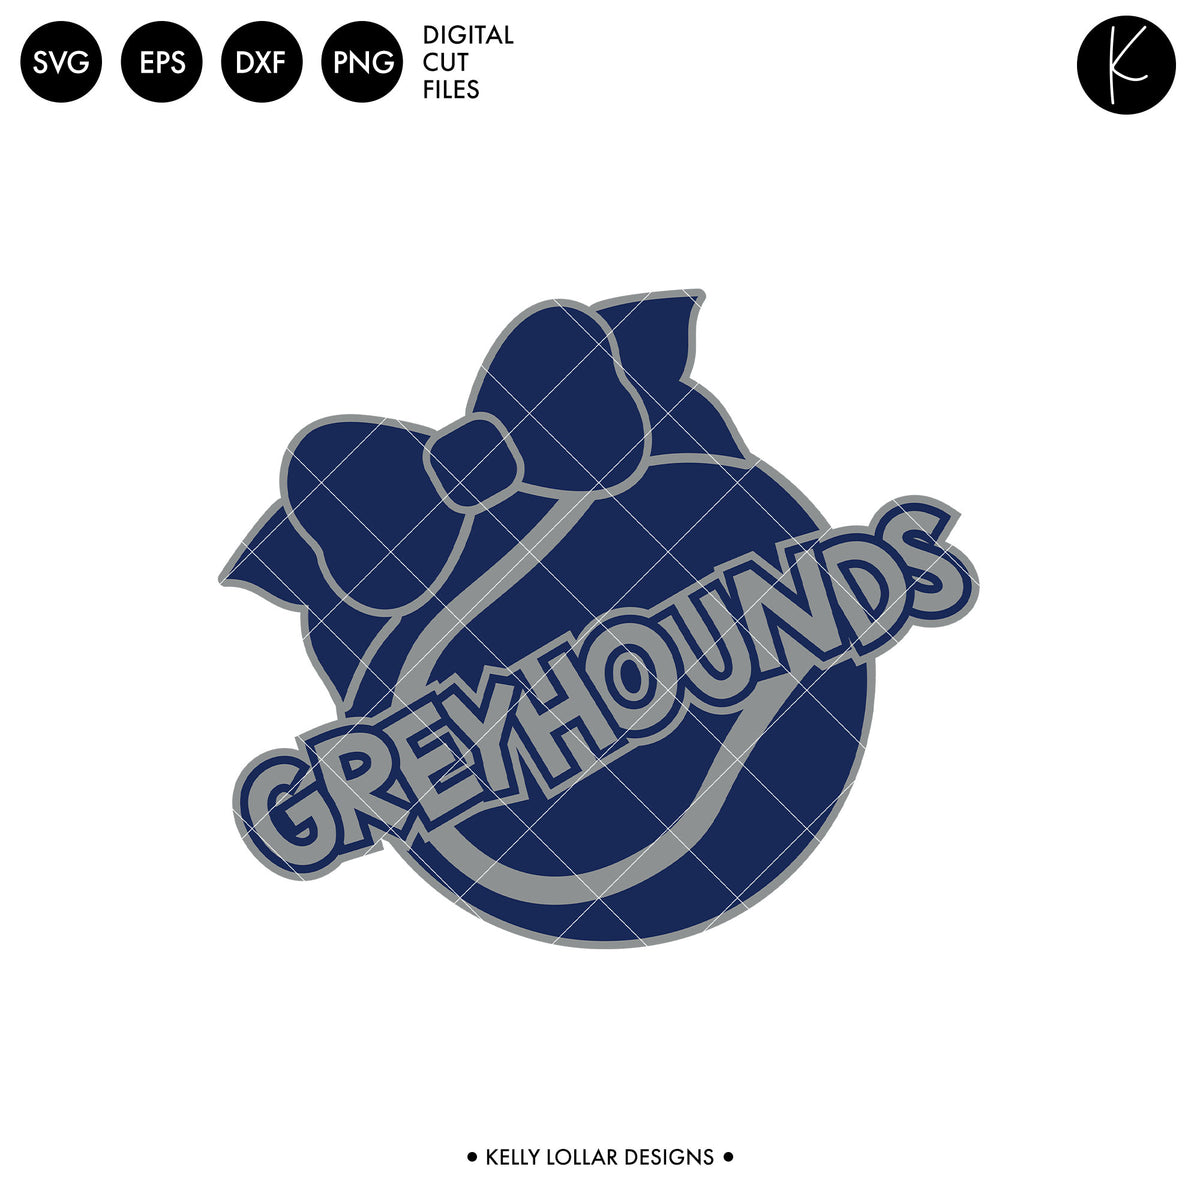 Greyhounds Tennis Bundle | SVG DXF EPS PNG Cut Files